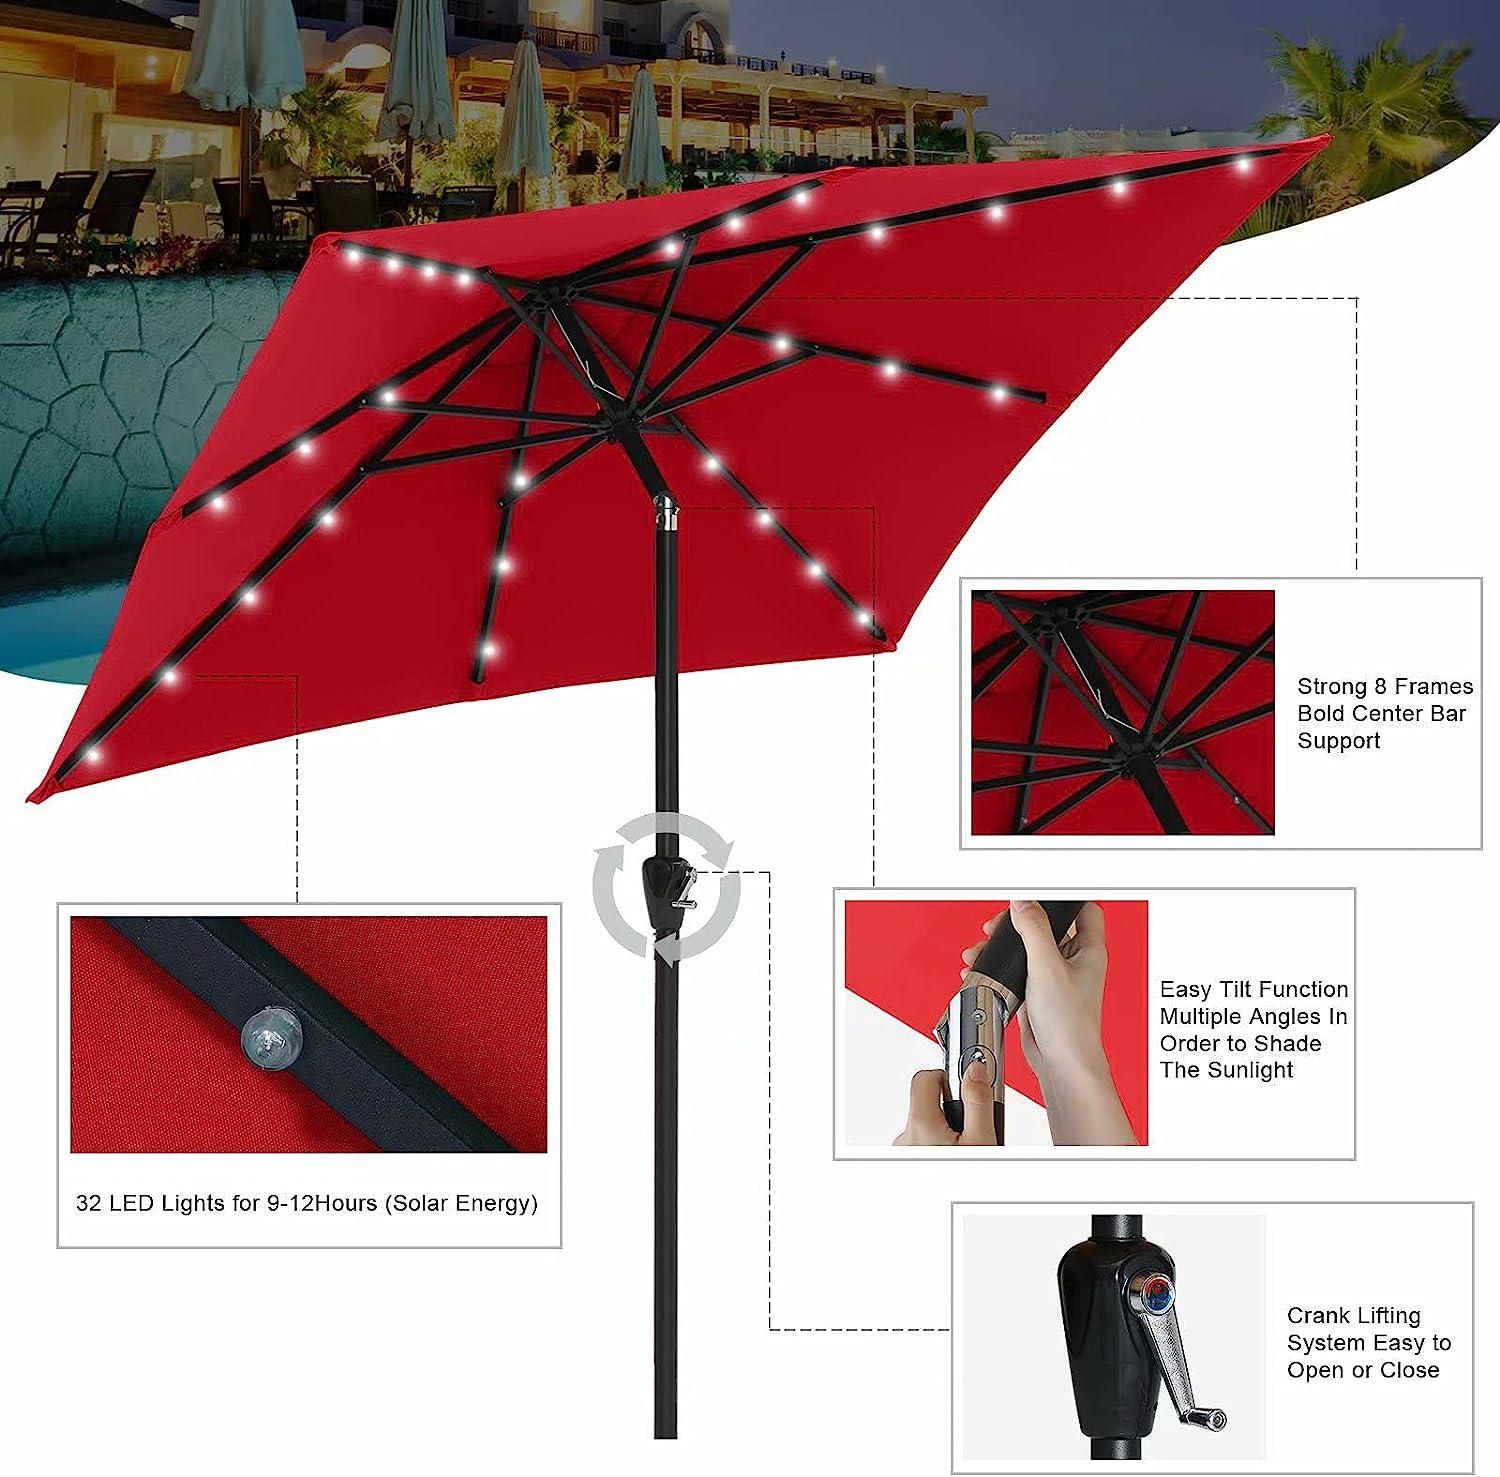 LazyRella™ LED Rectangle Patio Umbrella,6.5x10ft Market Table Umbrella with Solar Powered Lights-Maroon - Lazy Pro